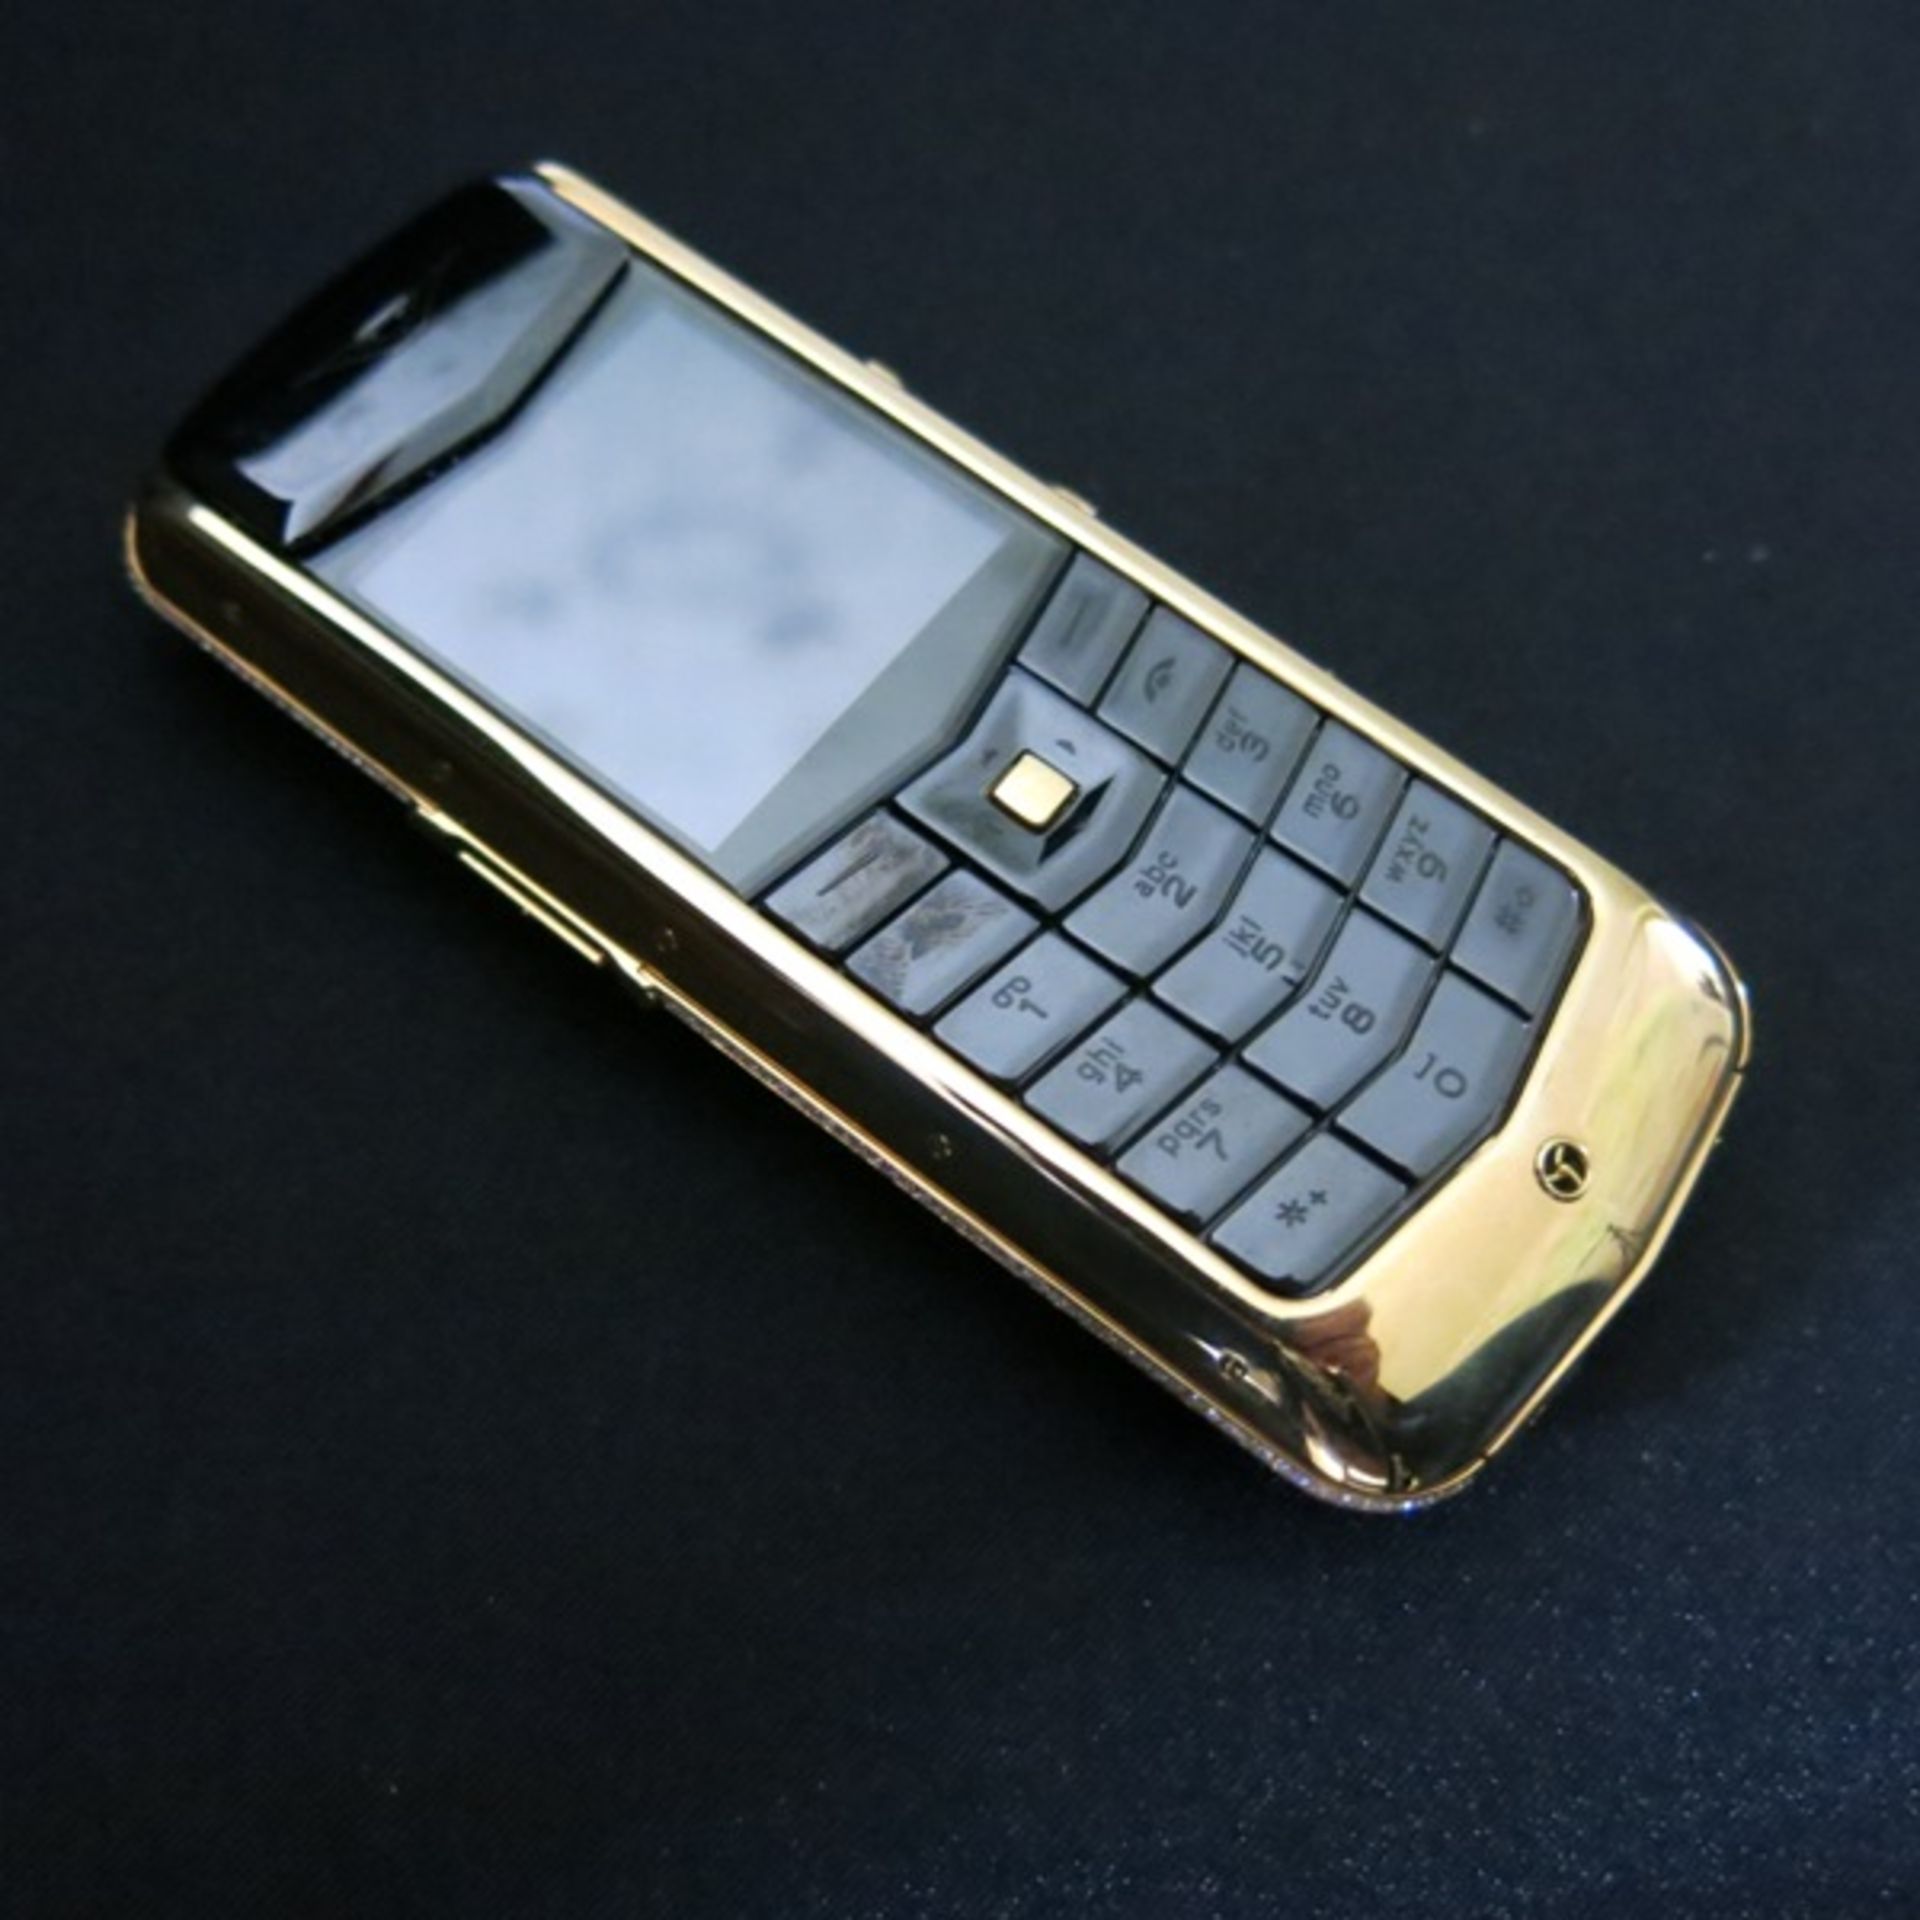 Vertu Constellation Classic Phone with 18kt Yellow Gold & Diamond Trim Bezel, Back Plate, Select Key